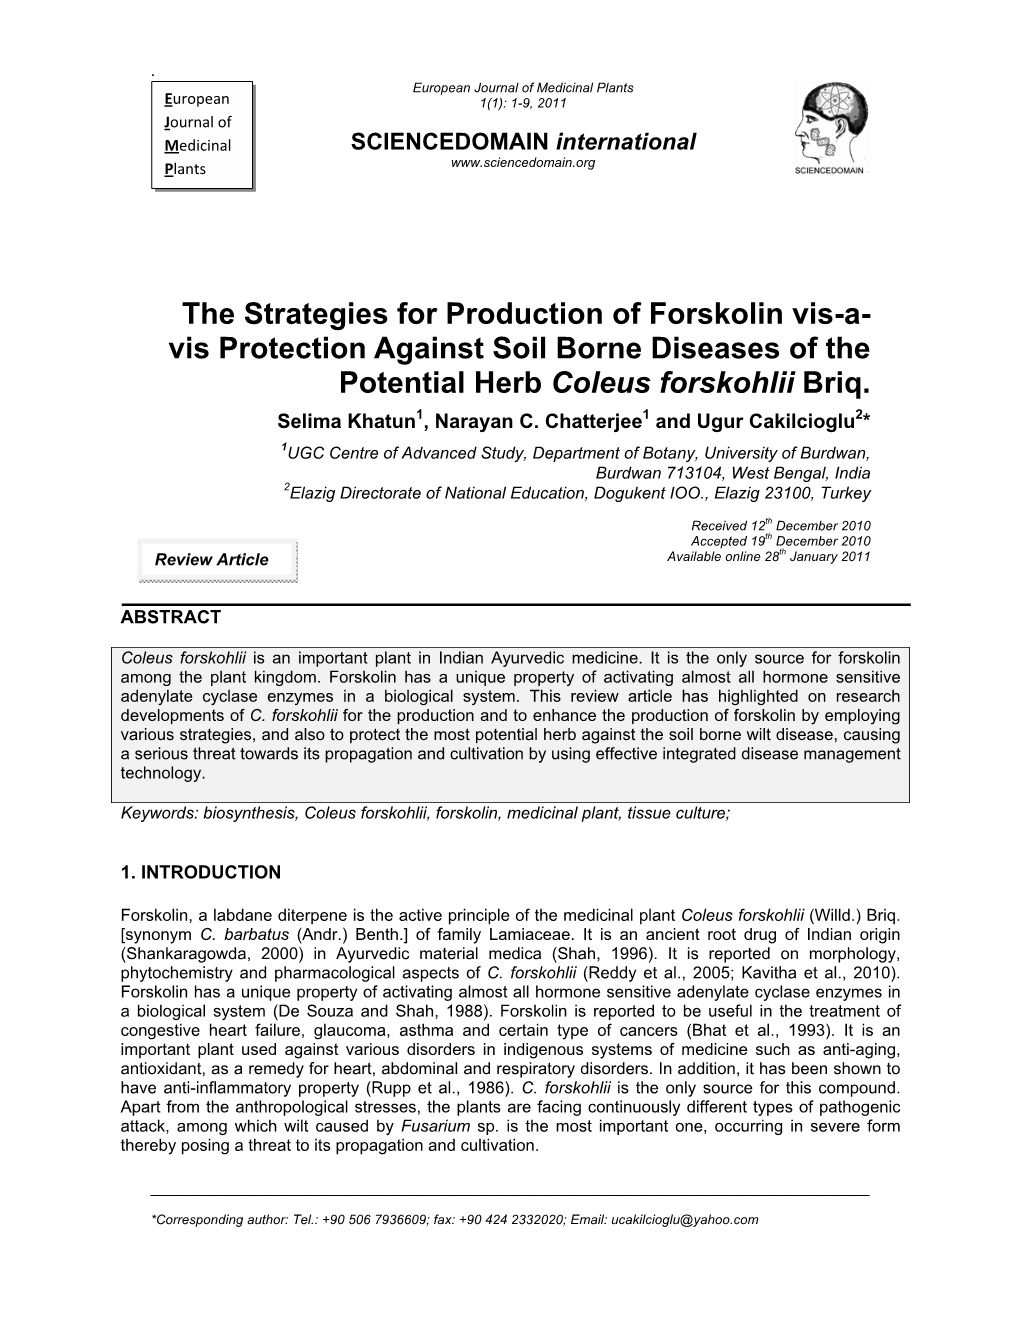 The Strategies for Production of Forskolin Vis-A- Vis Protection Against Soil Borne Diseases of the Potential Herb Coleus Forskohlii Briq